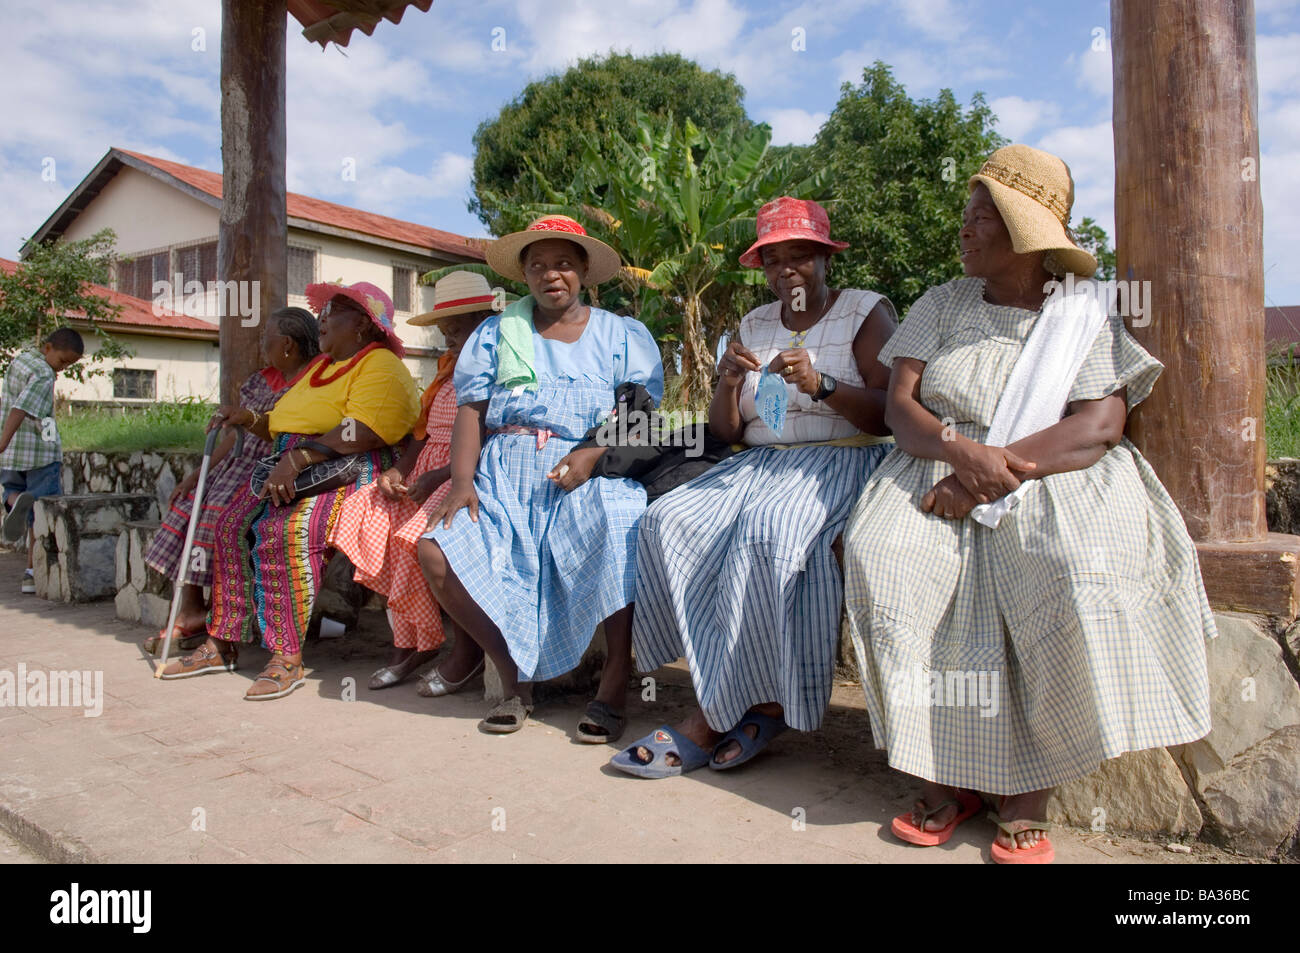 Garifuna women sitting on a bench during the annual Garifuna festival in Livingston, Guatemala. Stock Photo